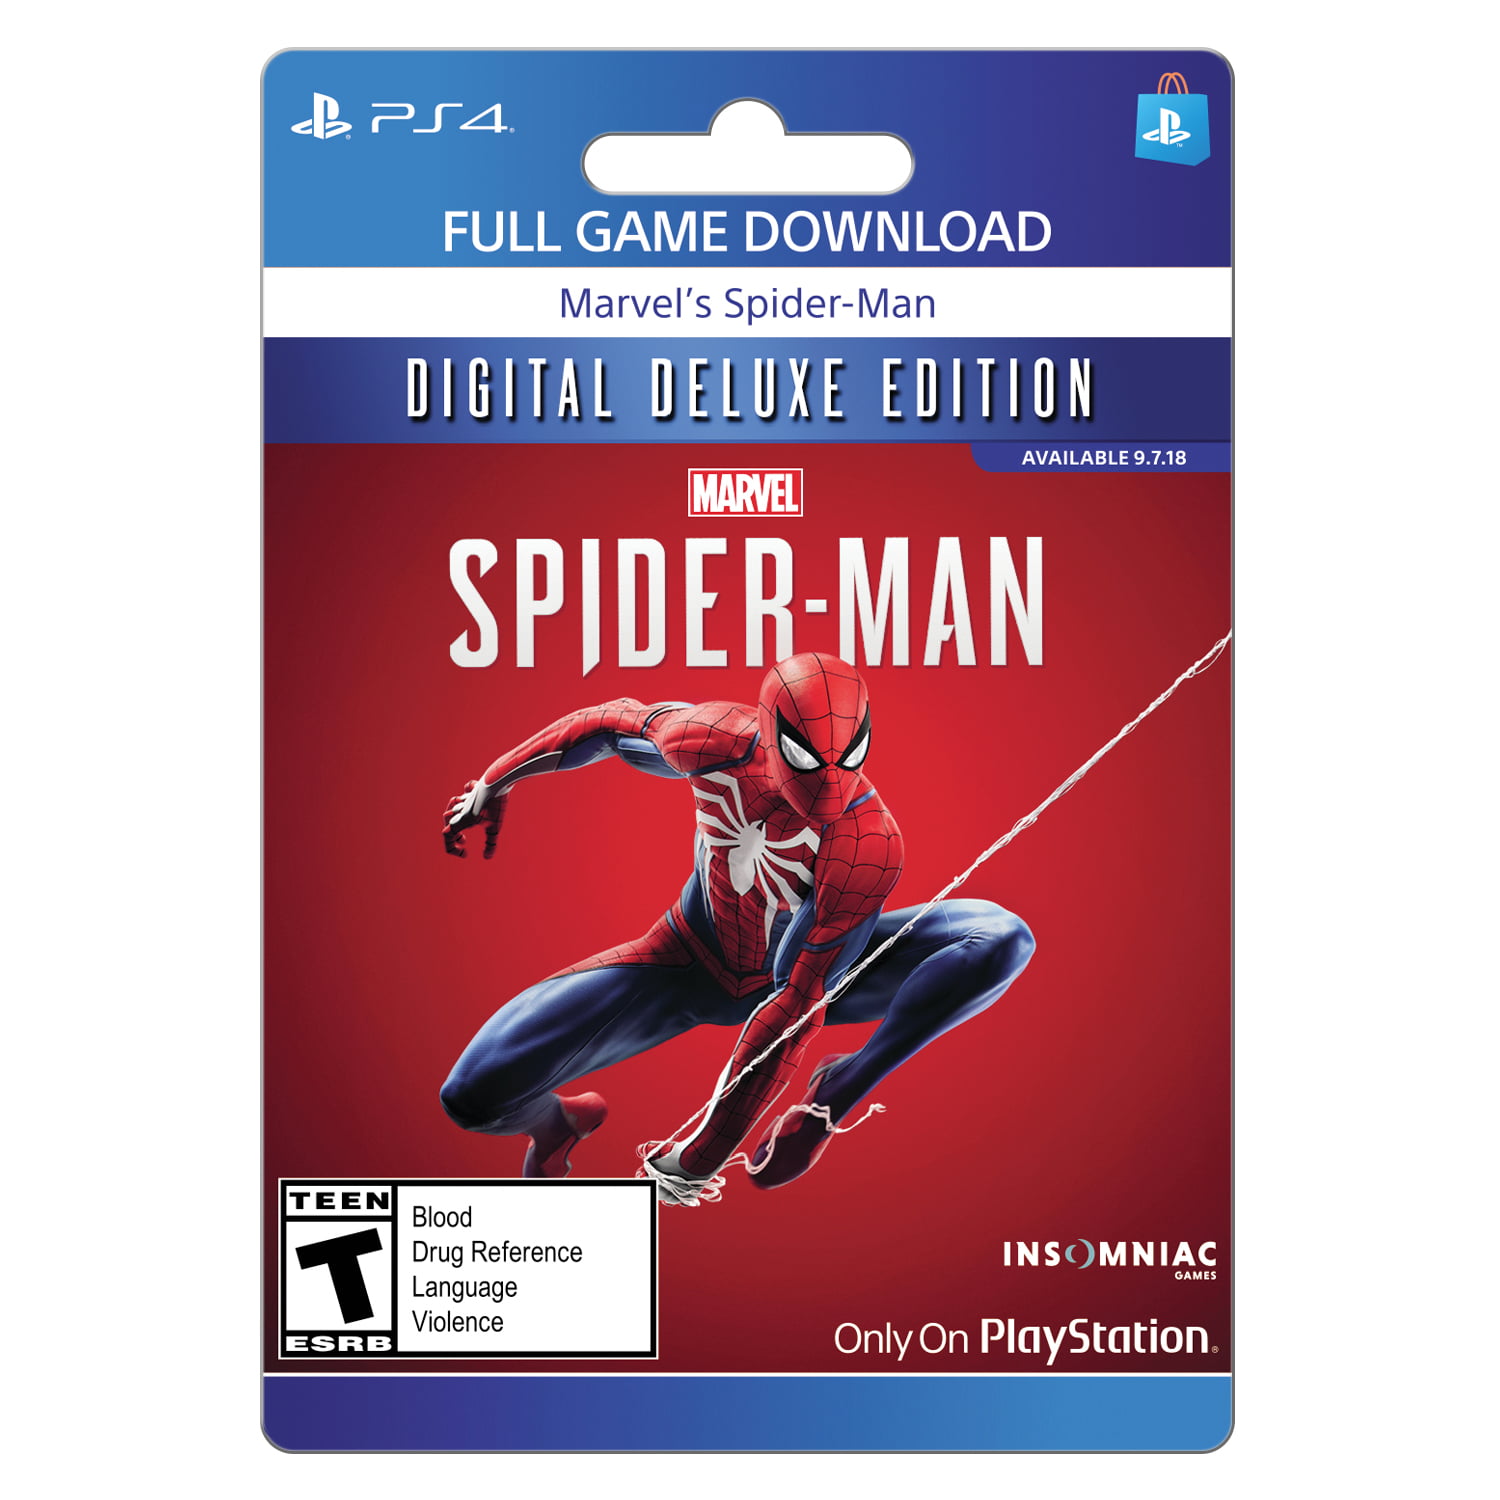 ps4 spiderman edition